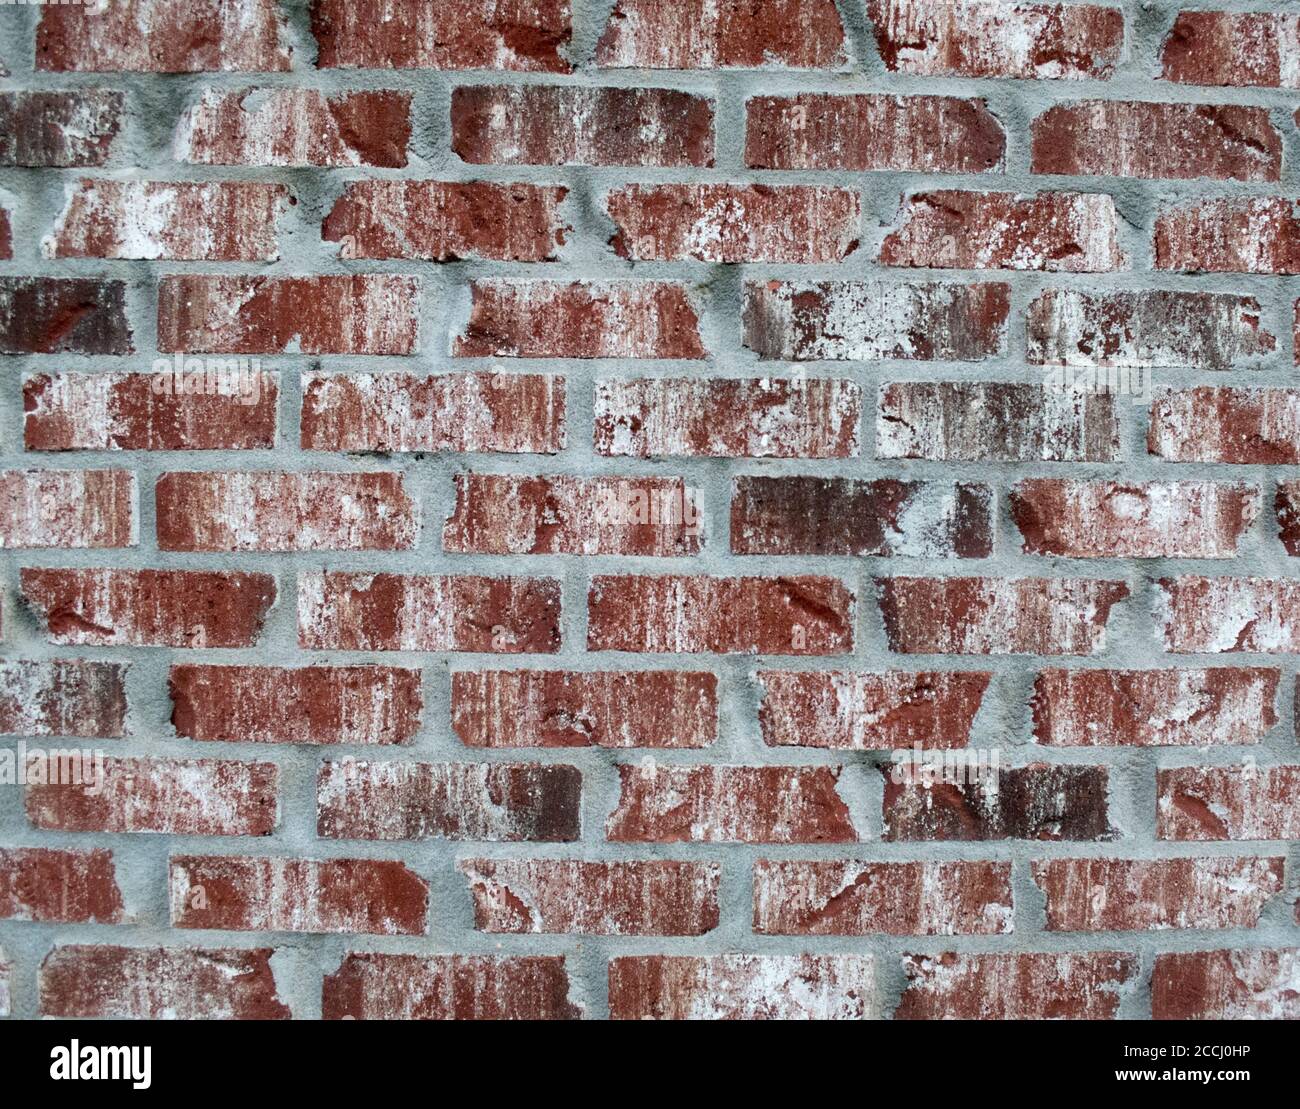 Bricks with sharp texture Stock Photo